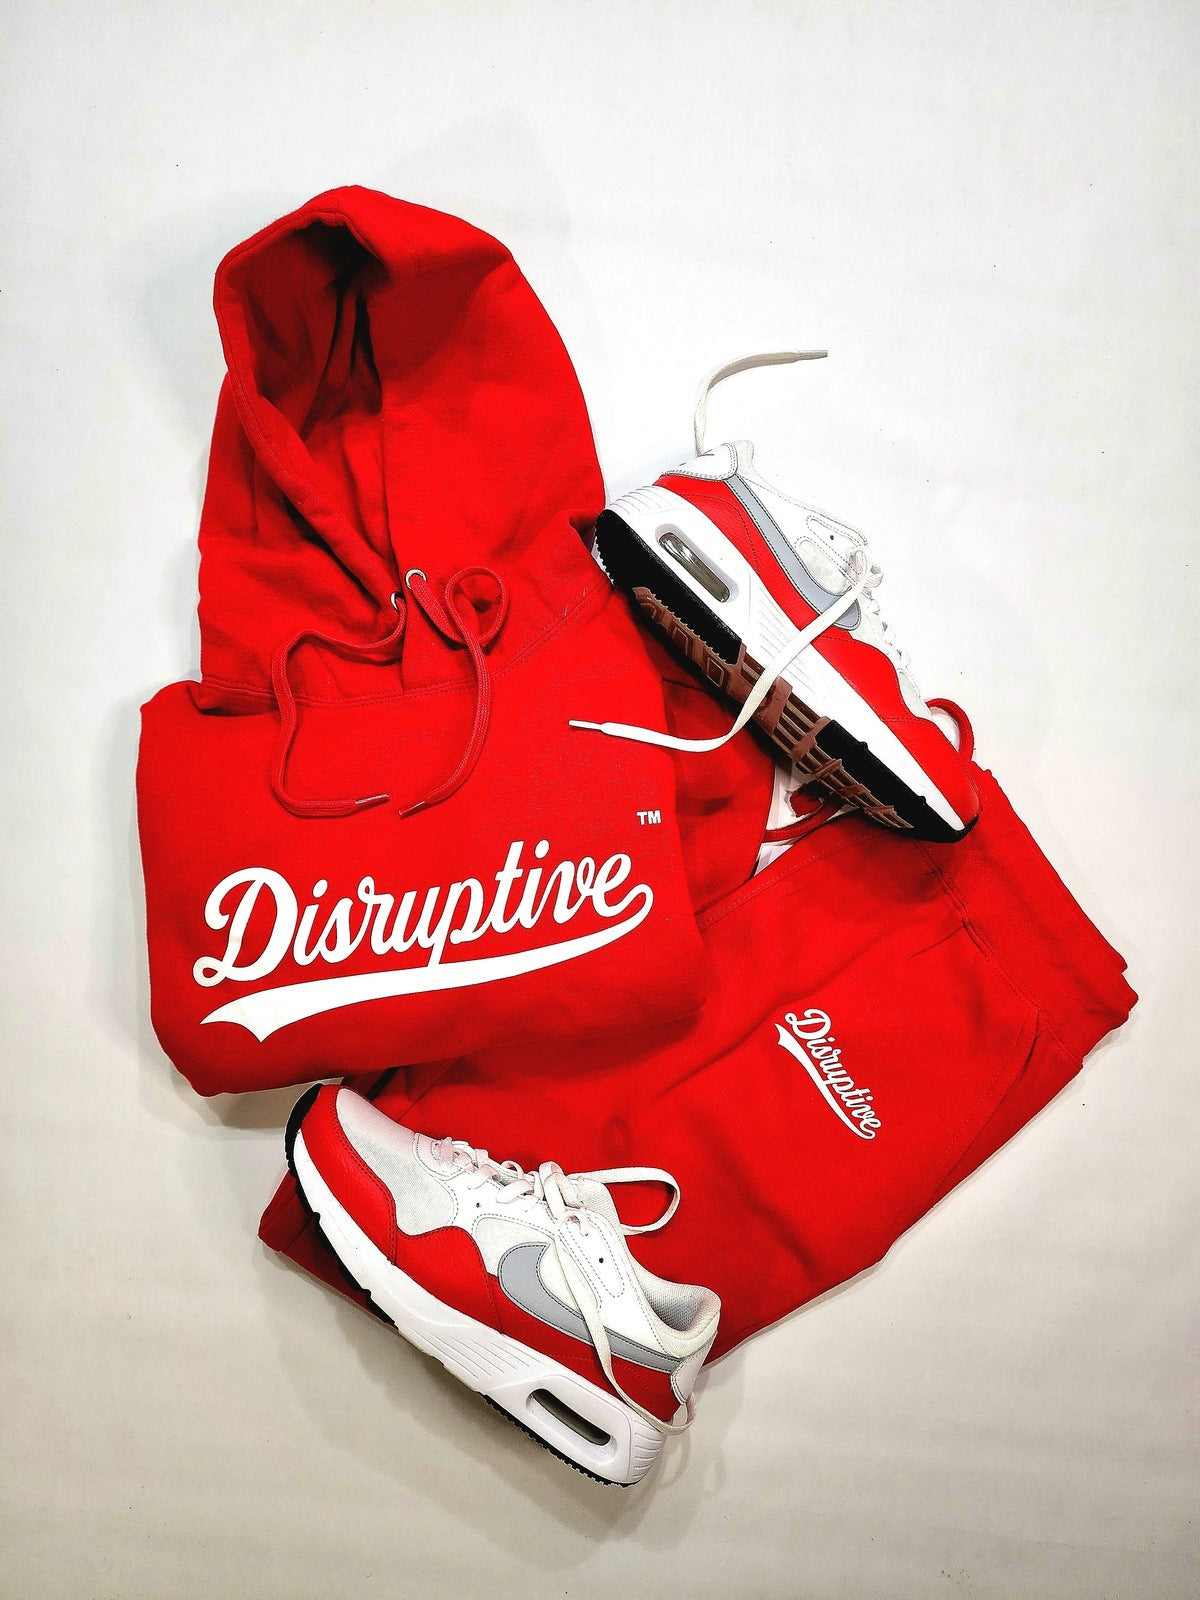 Disruptive "Swoosh" Red/White Set